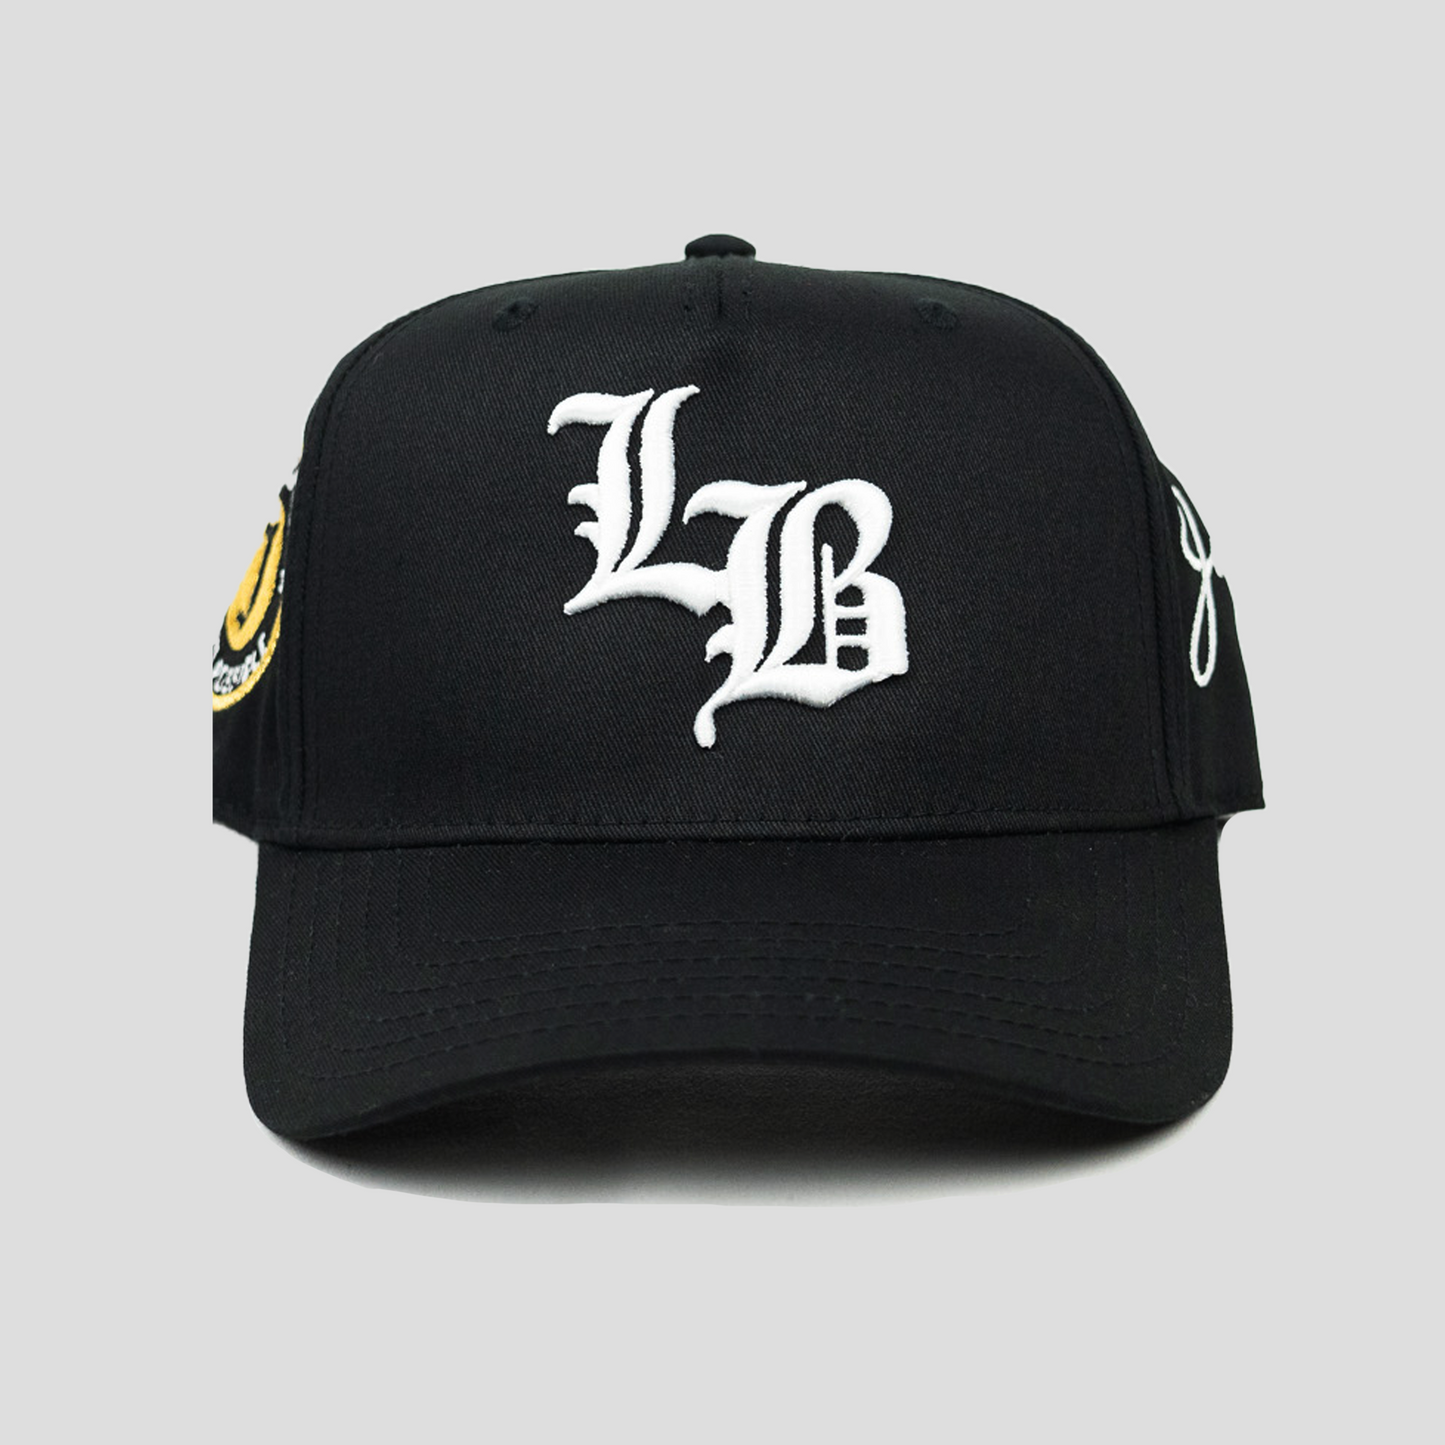 Jrip x LB Snapback Hat (BLACK)